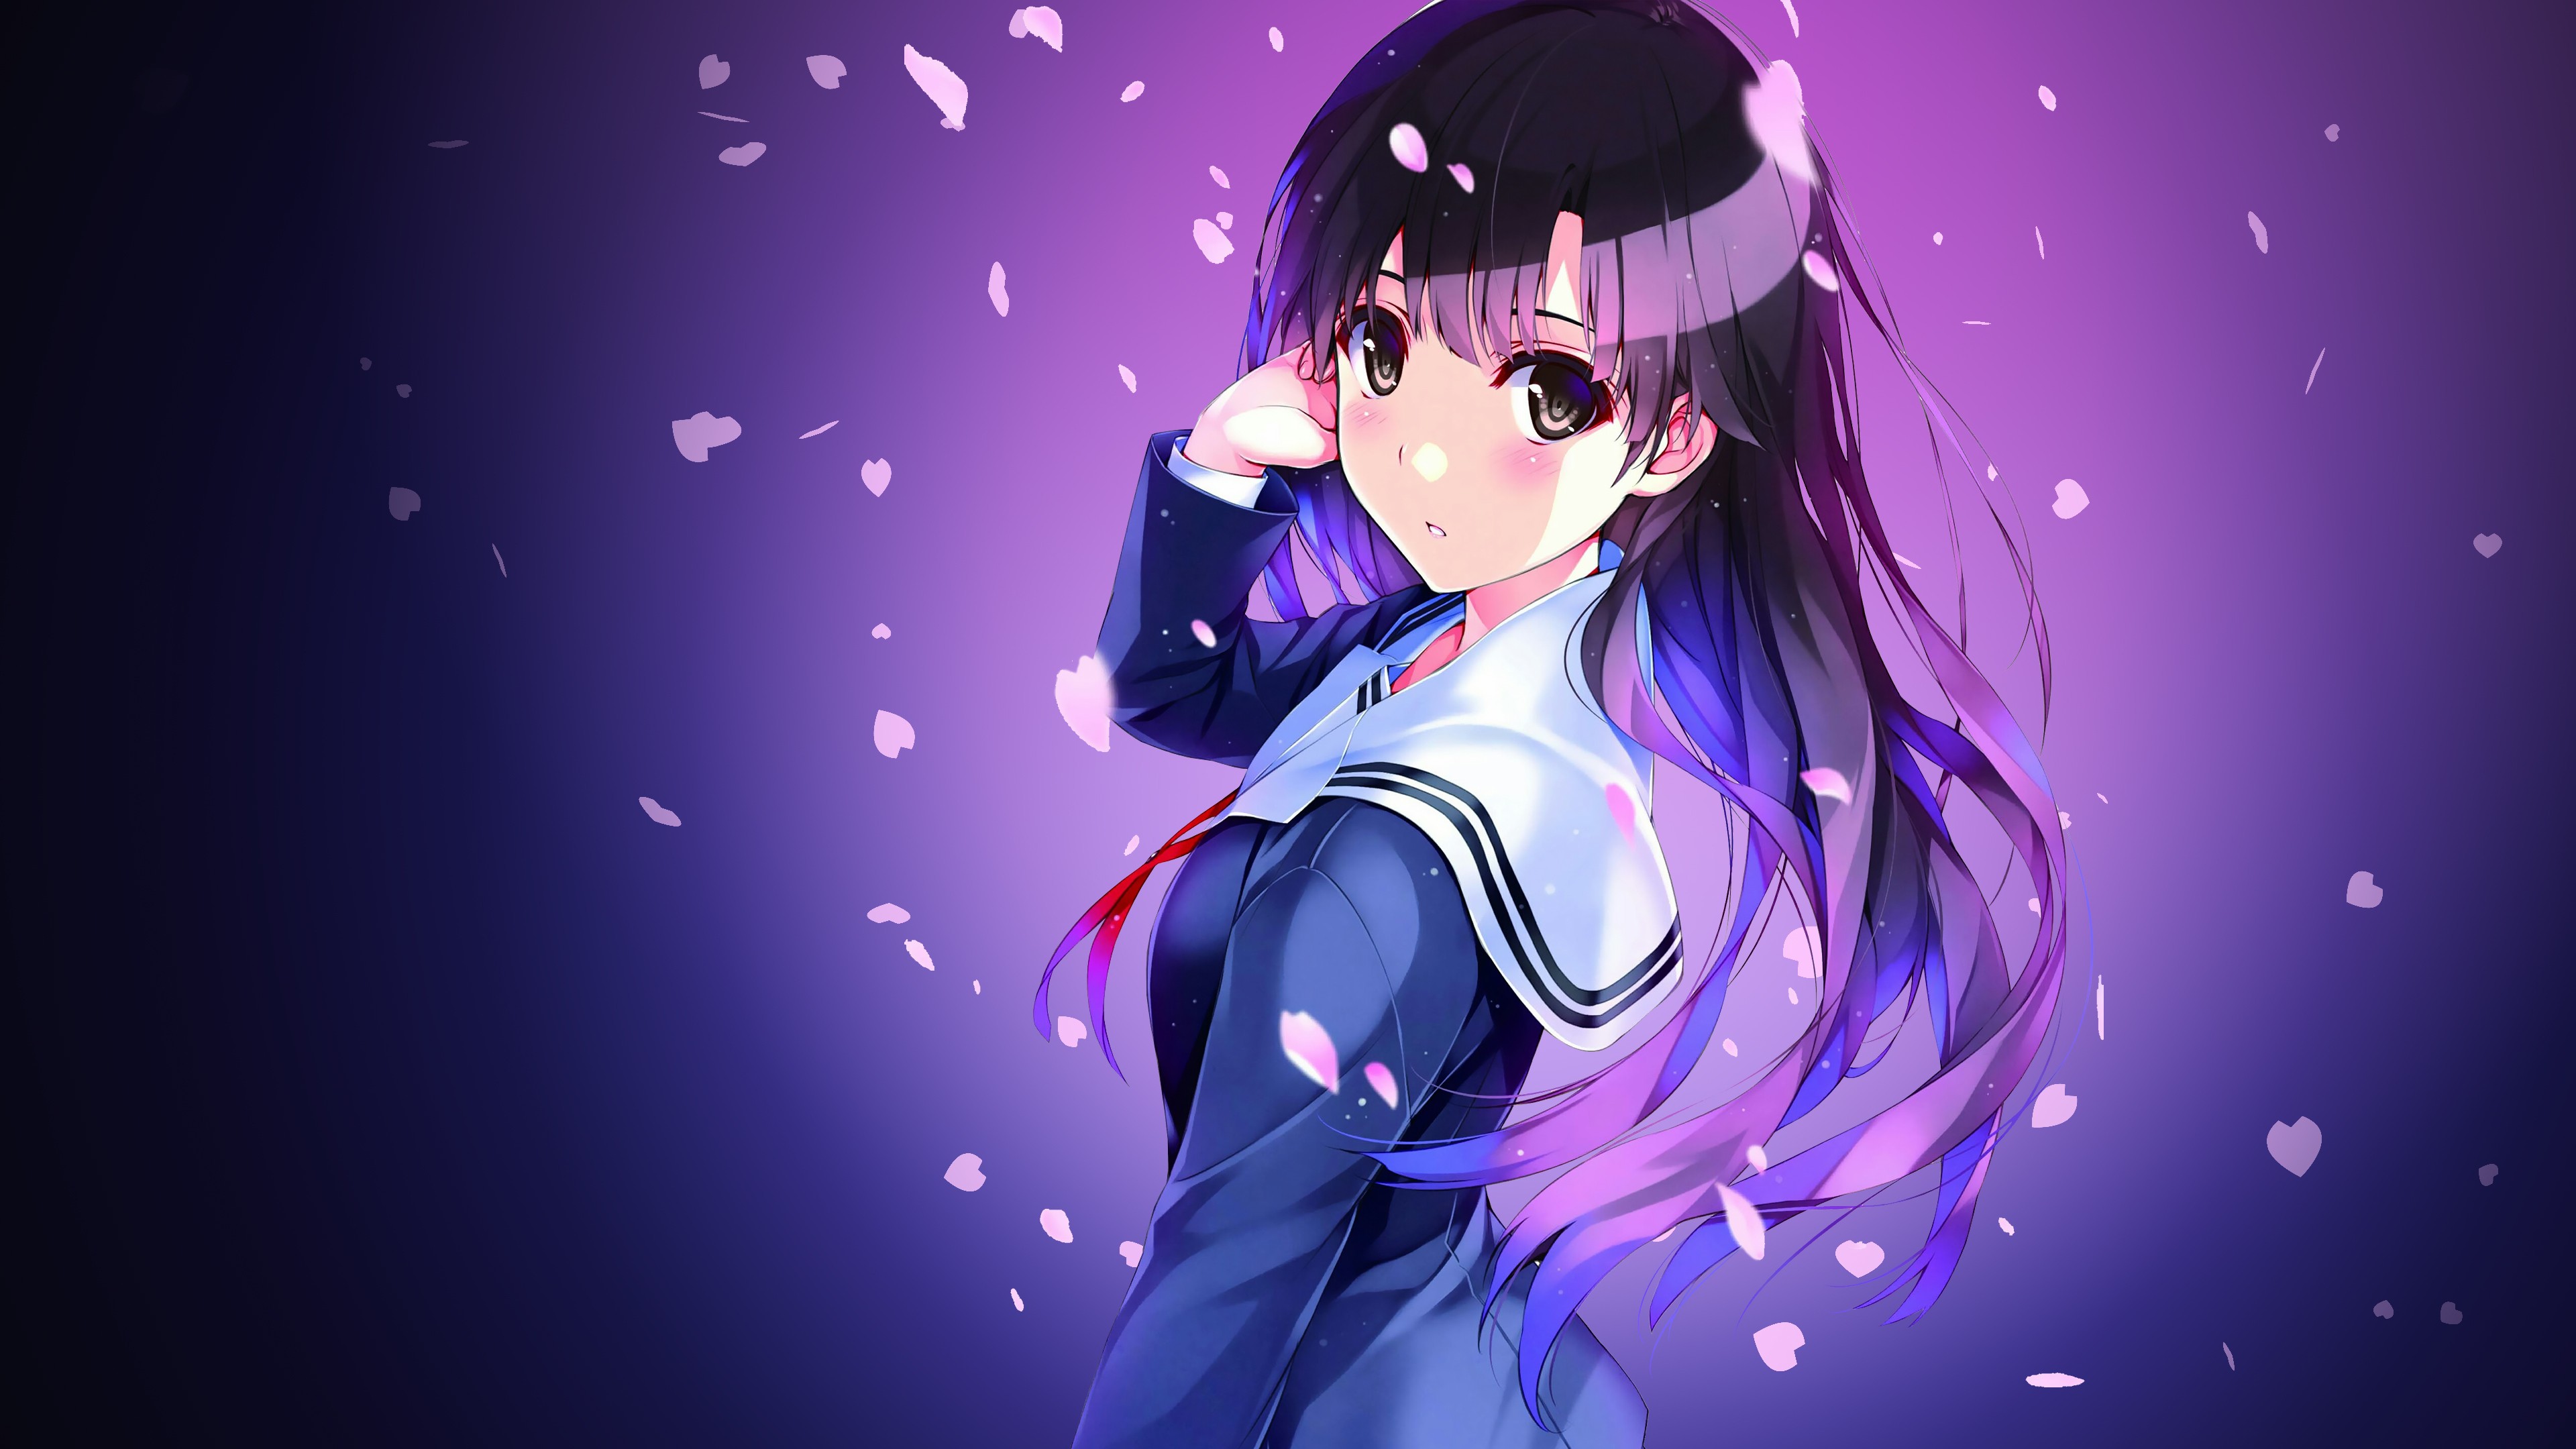 Anime Girl wallpaper HD ·① Download free cool full HD ...